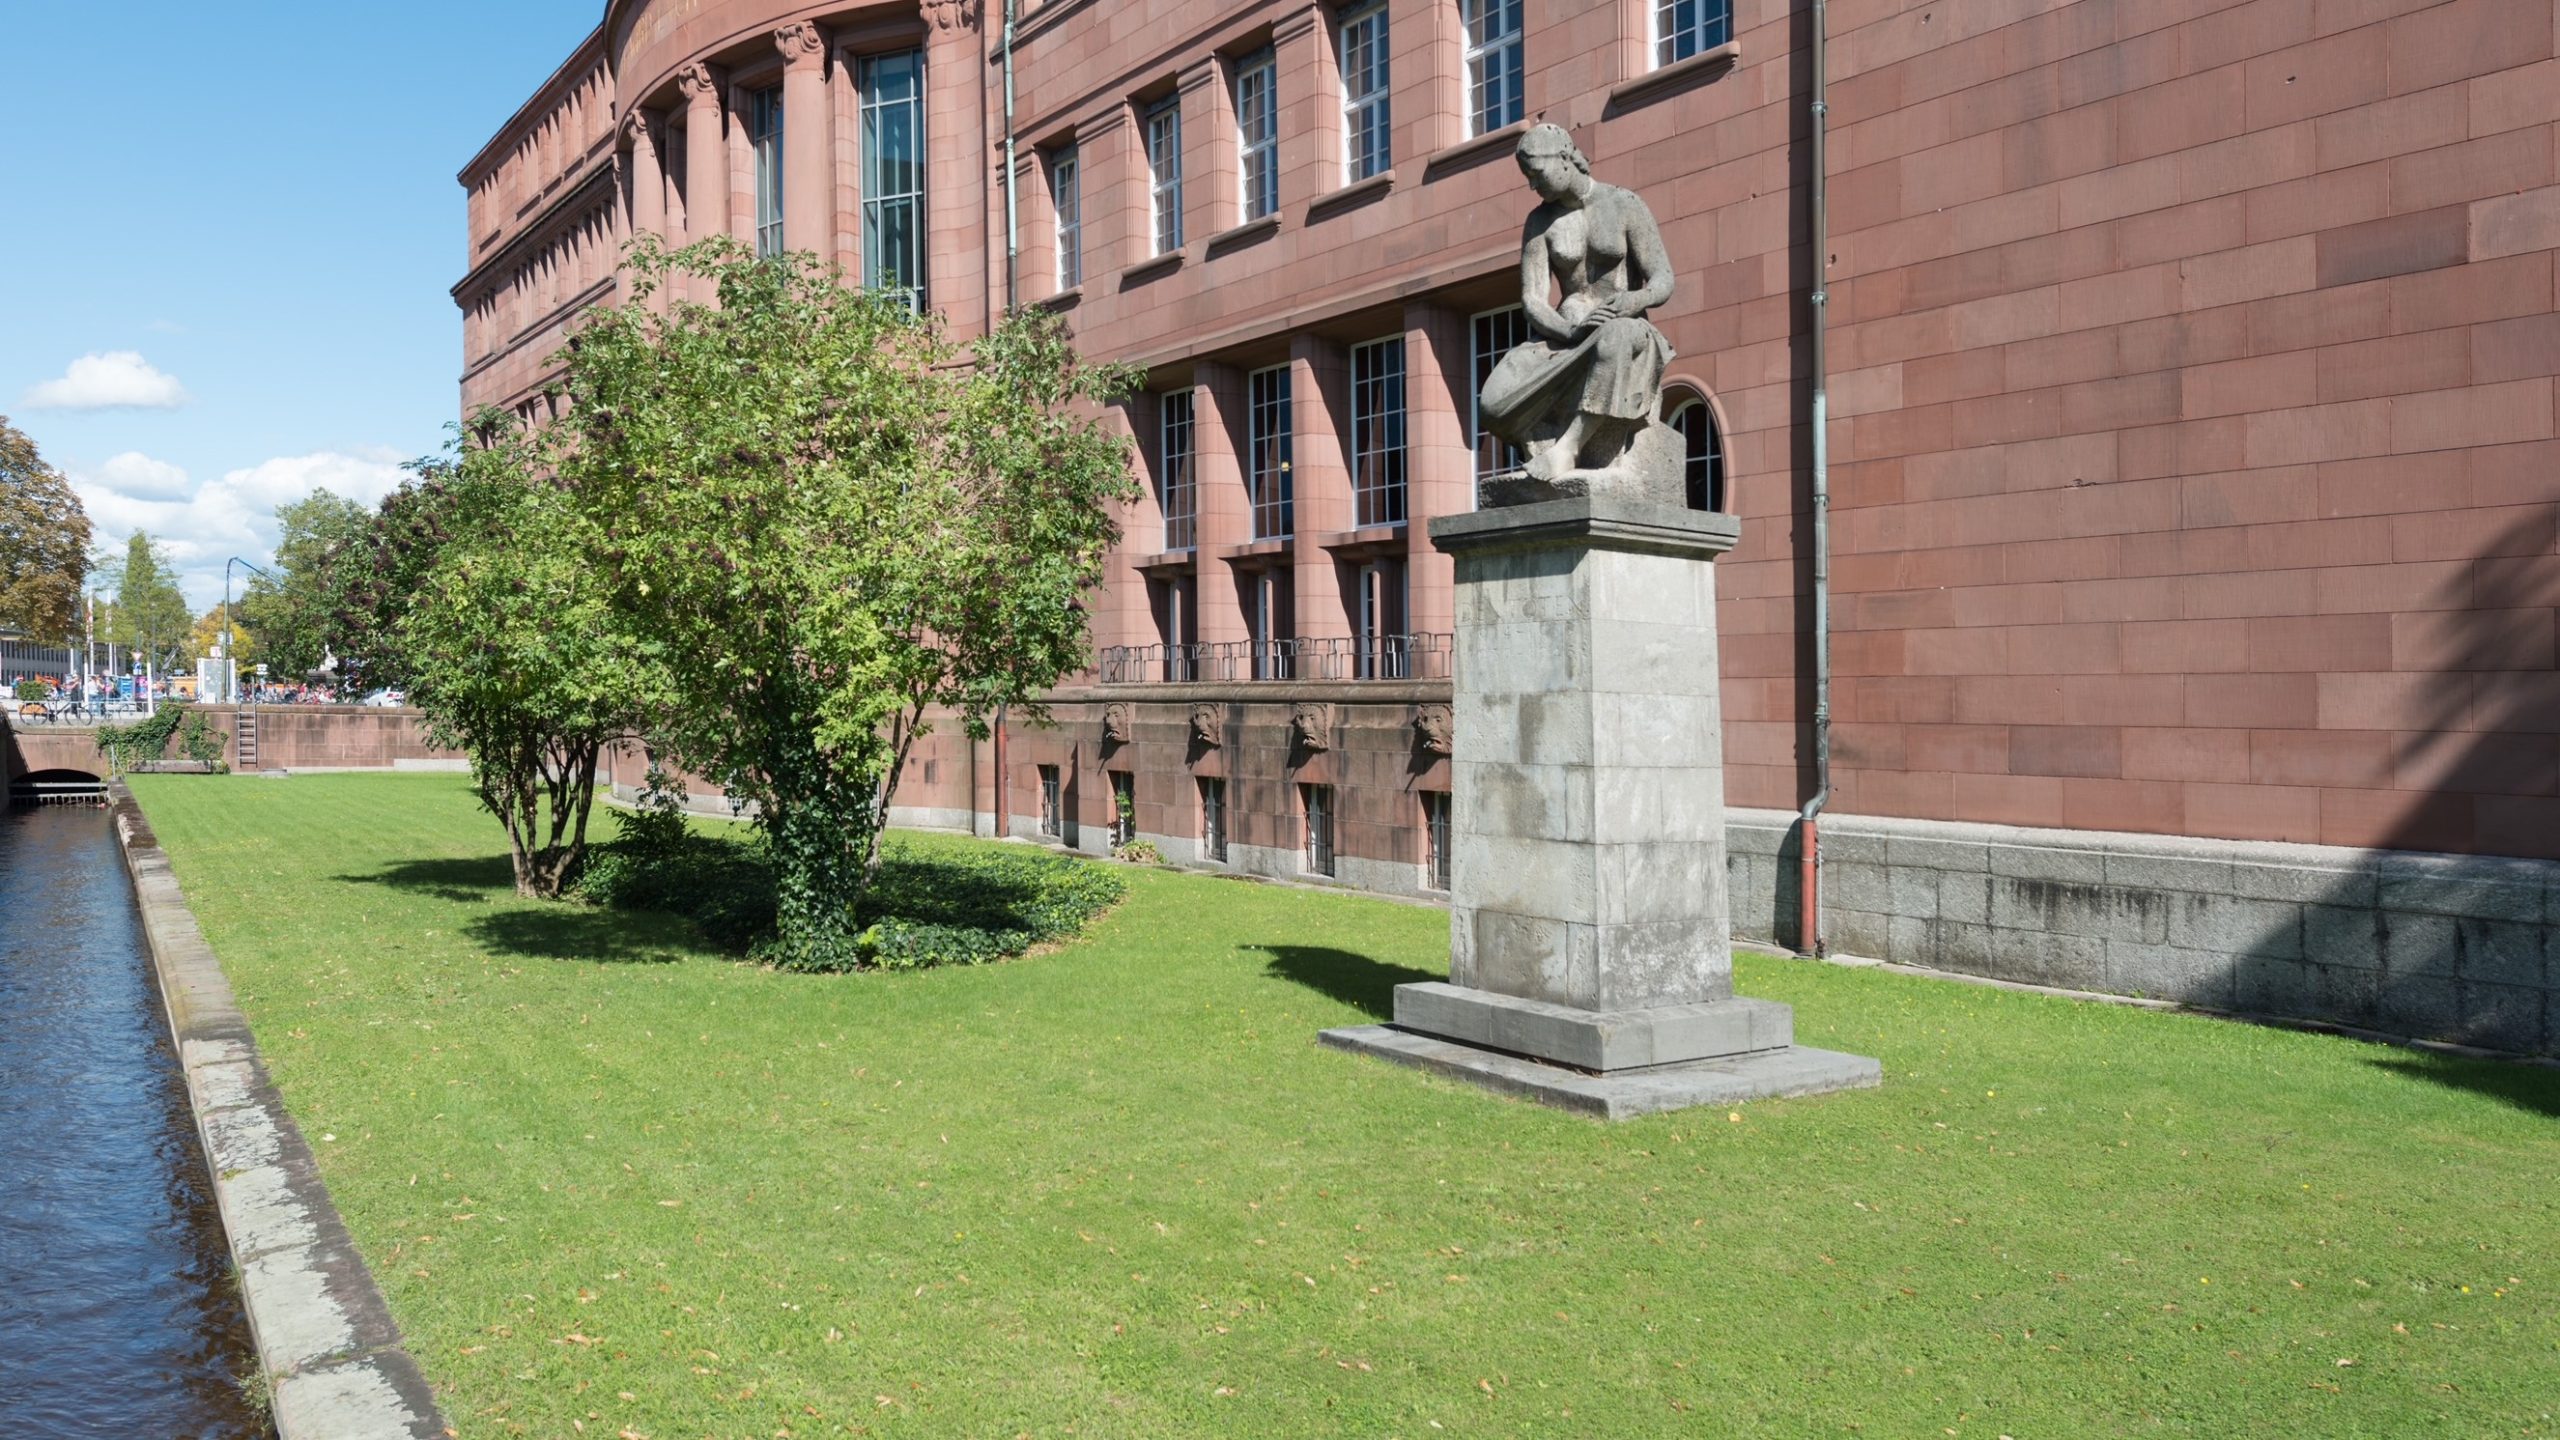 The University of Freiberg